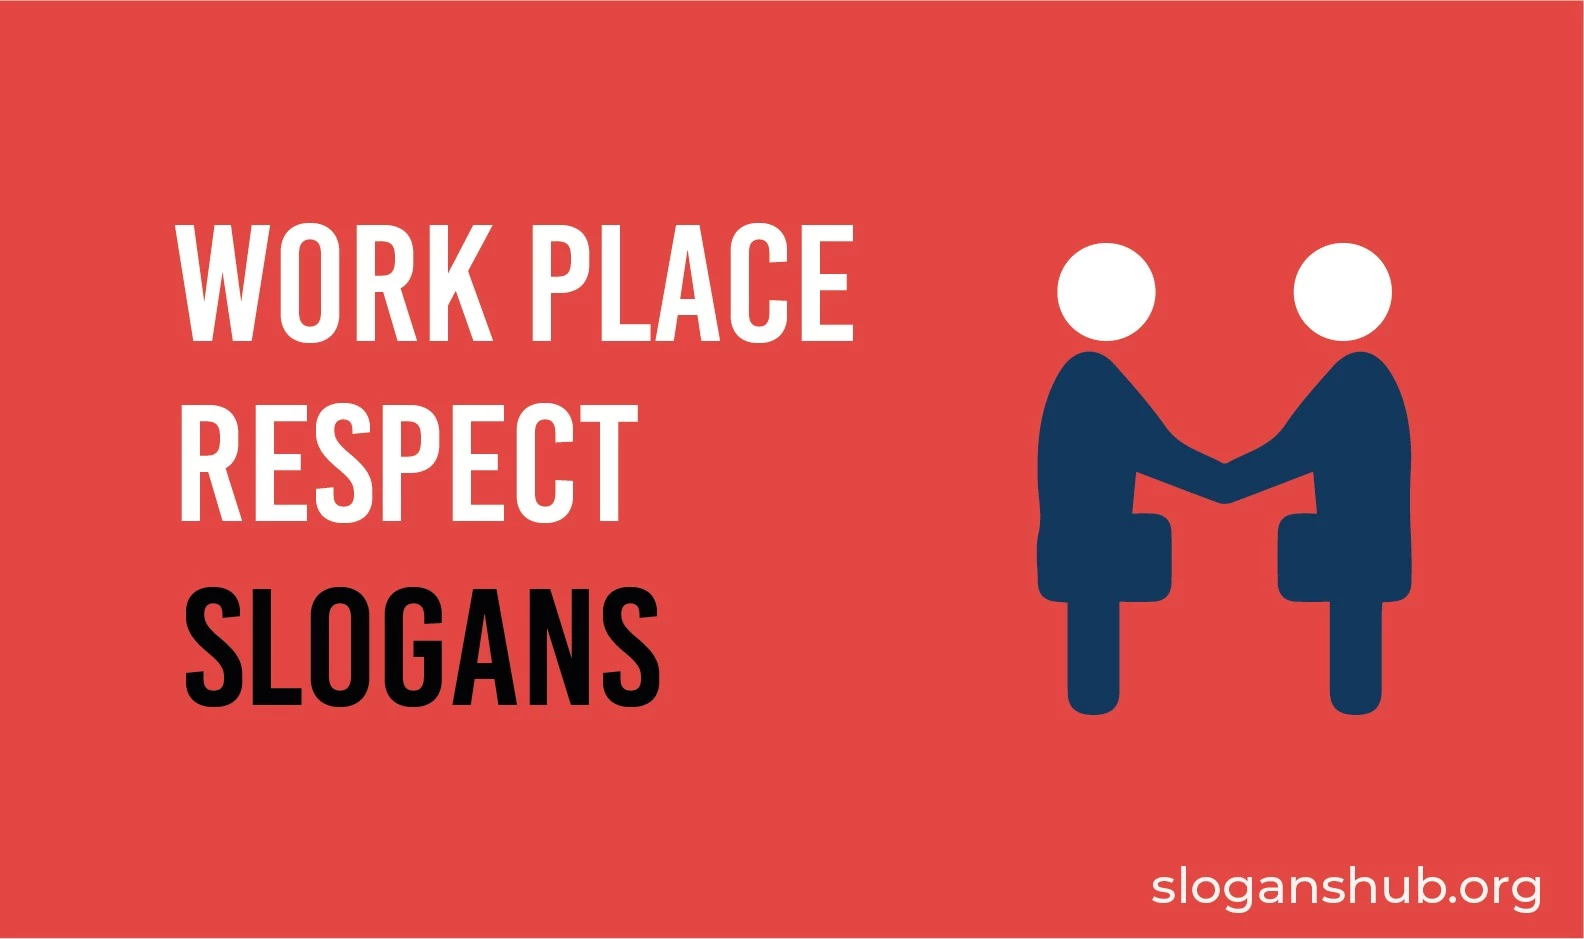 12 Best Workplace Respect Slogans